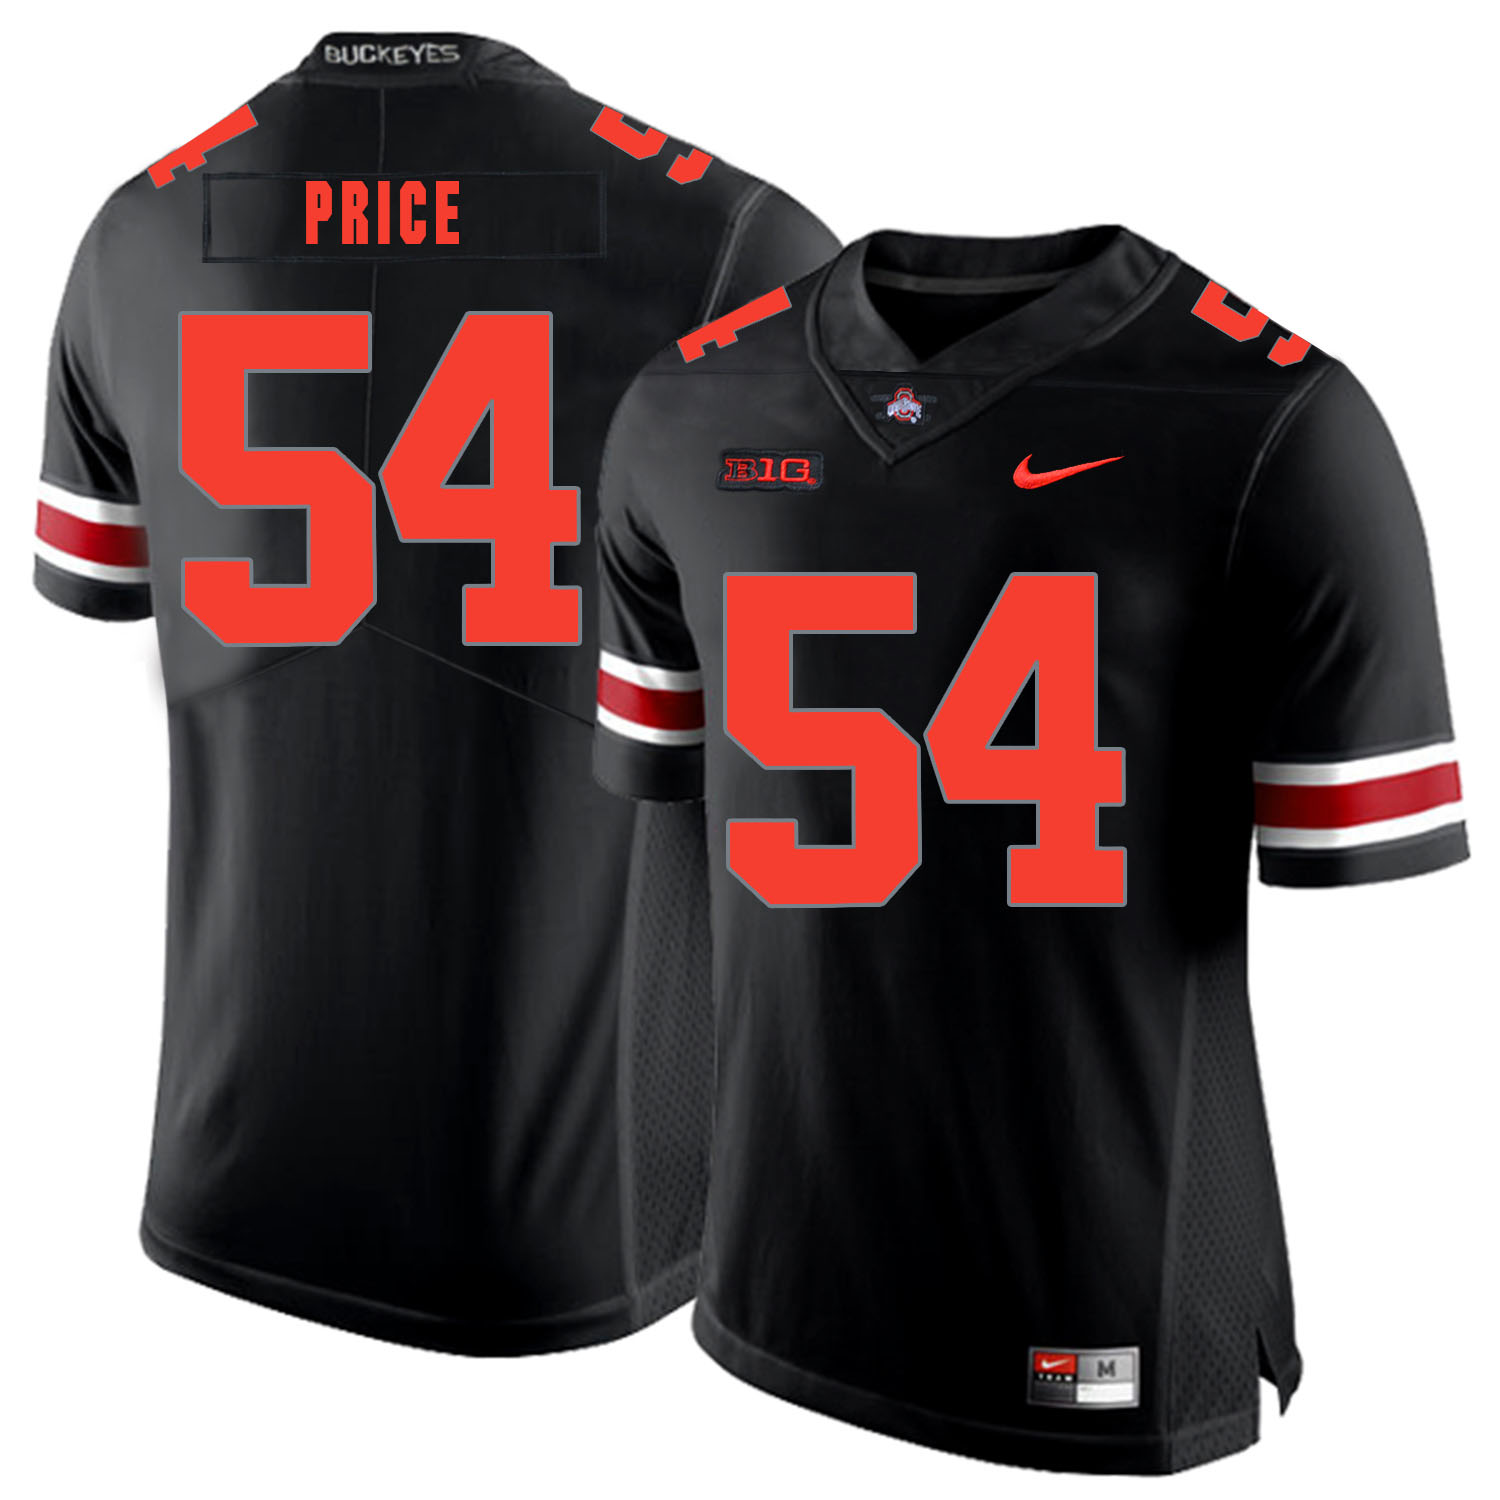 Ohio State Buckeyes 54 Billy Price Black Shadow Nike College Football Jersey